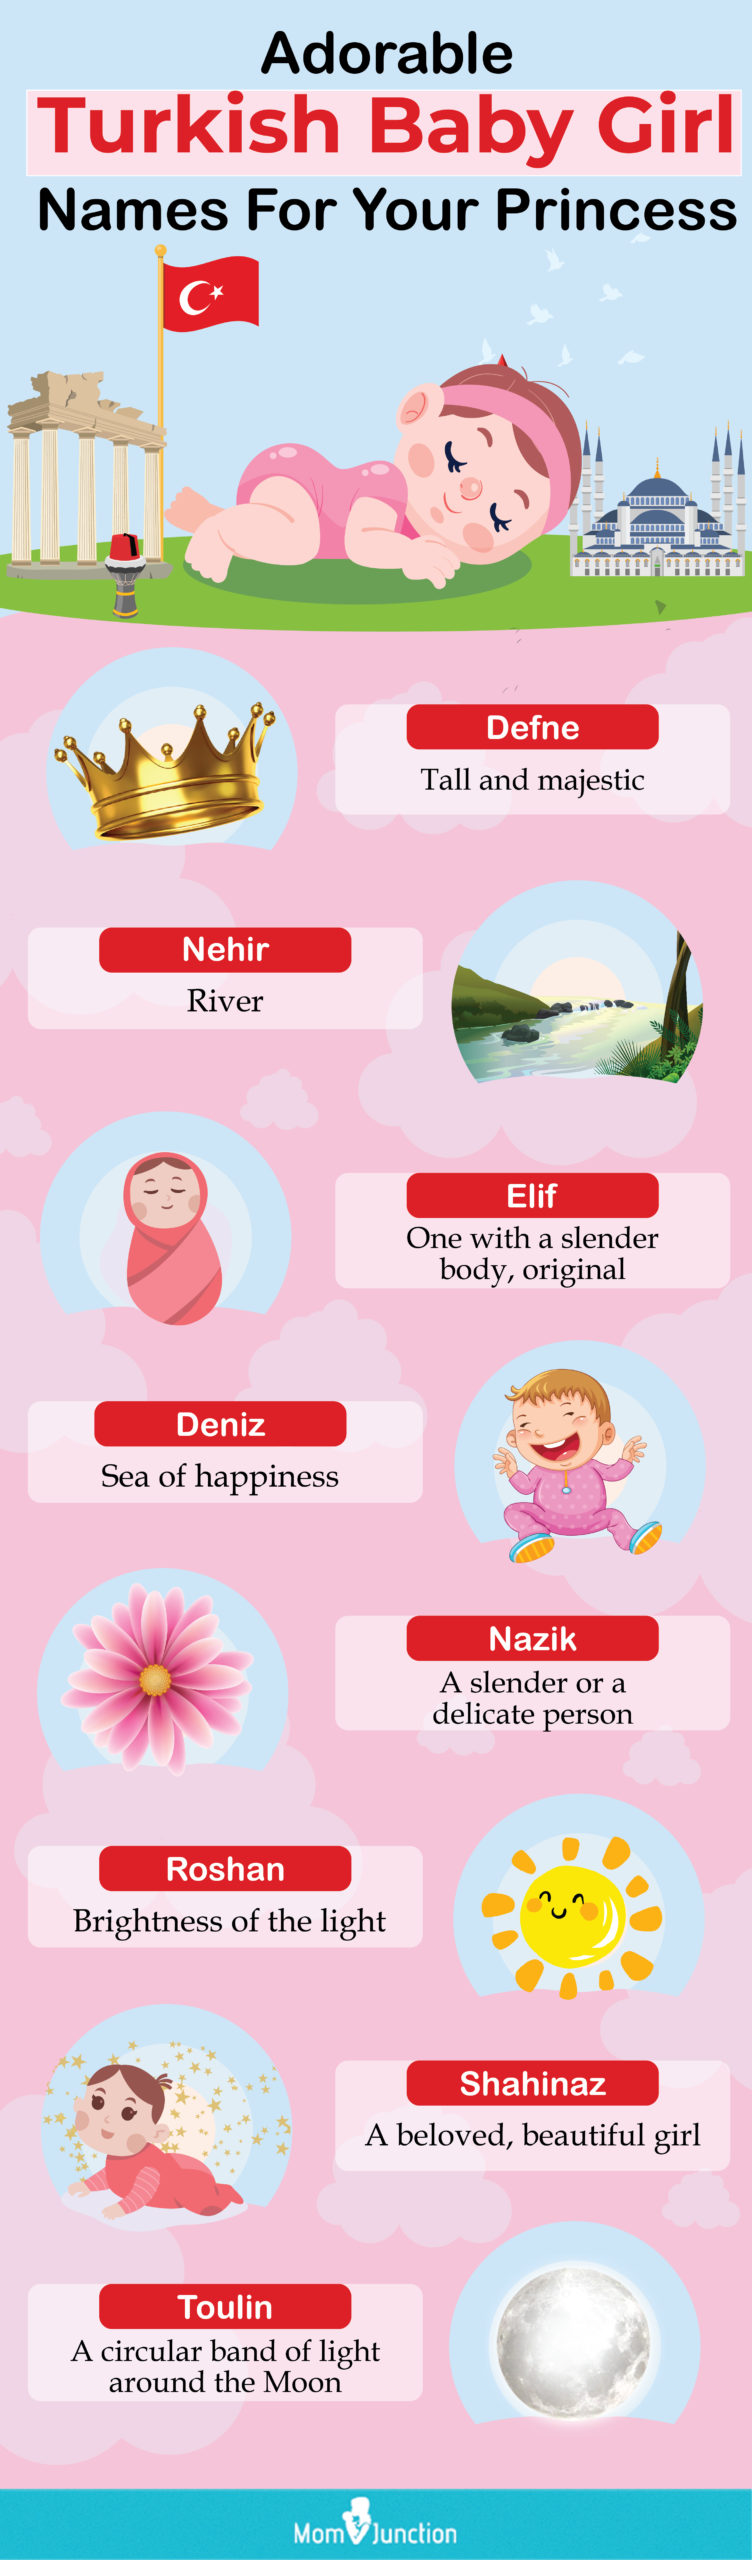 turkish baby girl names(infographic)